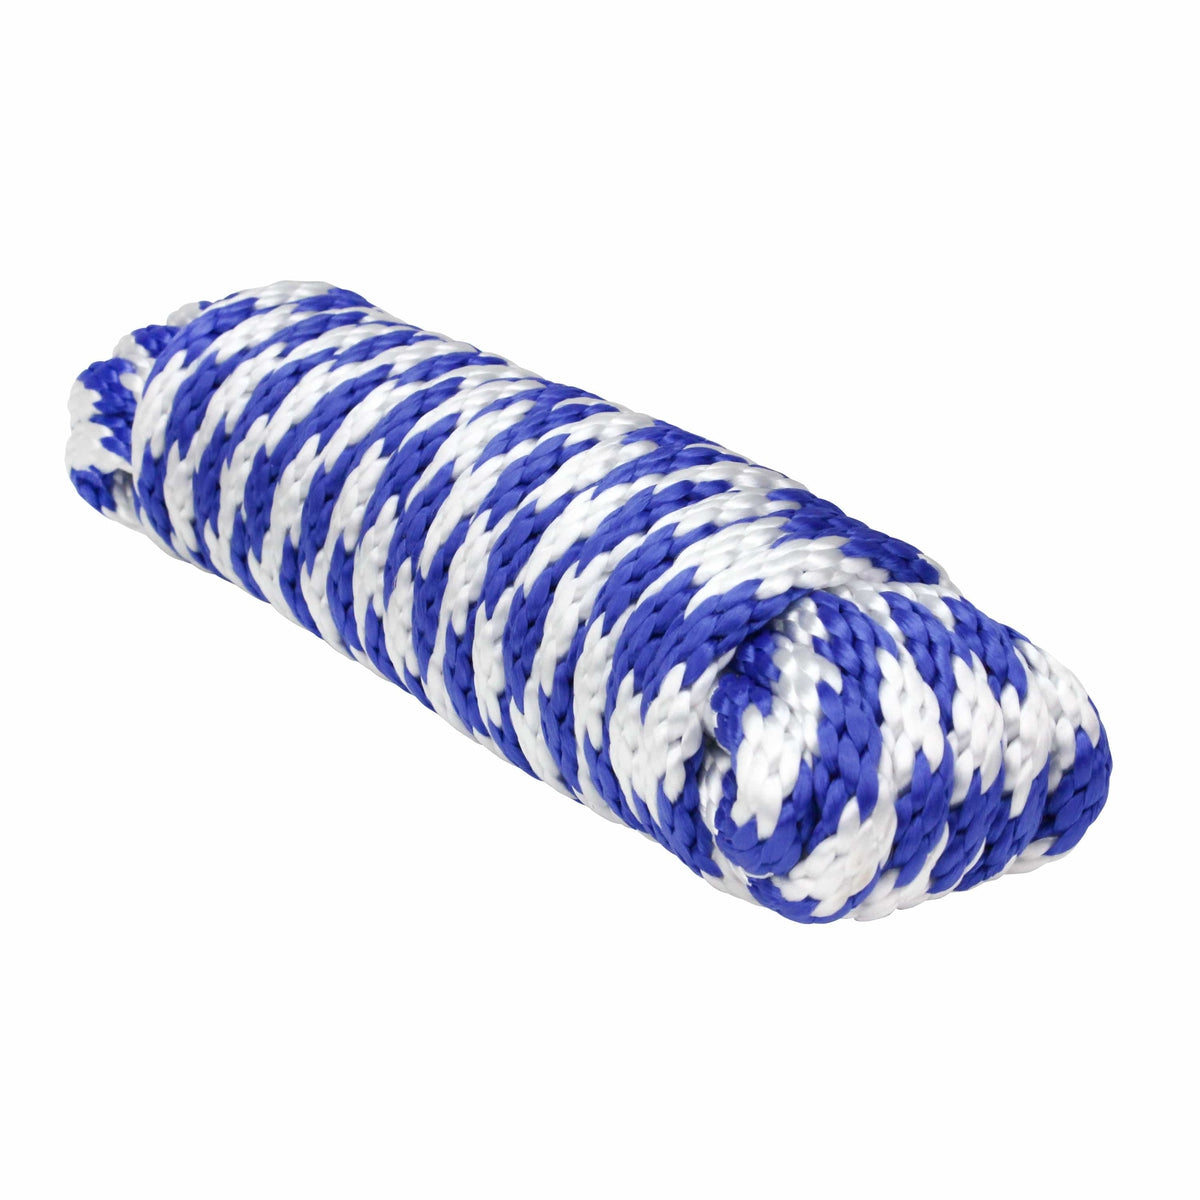 Extreme Max SB MFP Utility Rope 1/2" 10' Blue/White #3008.0217